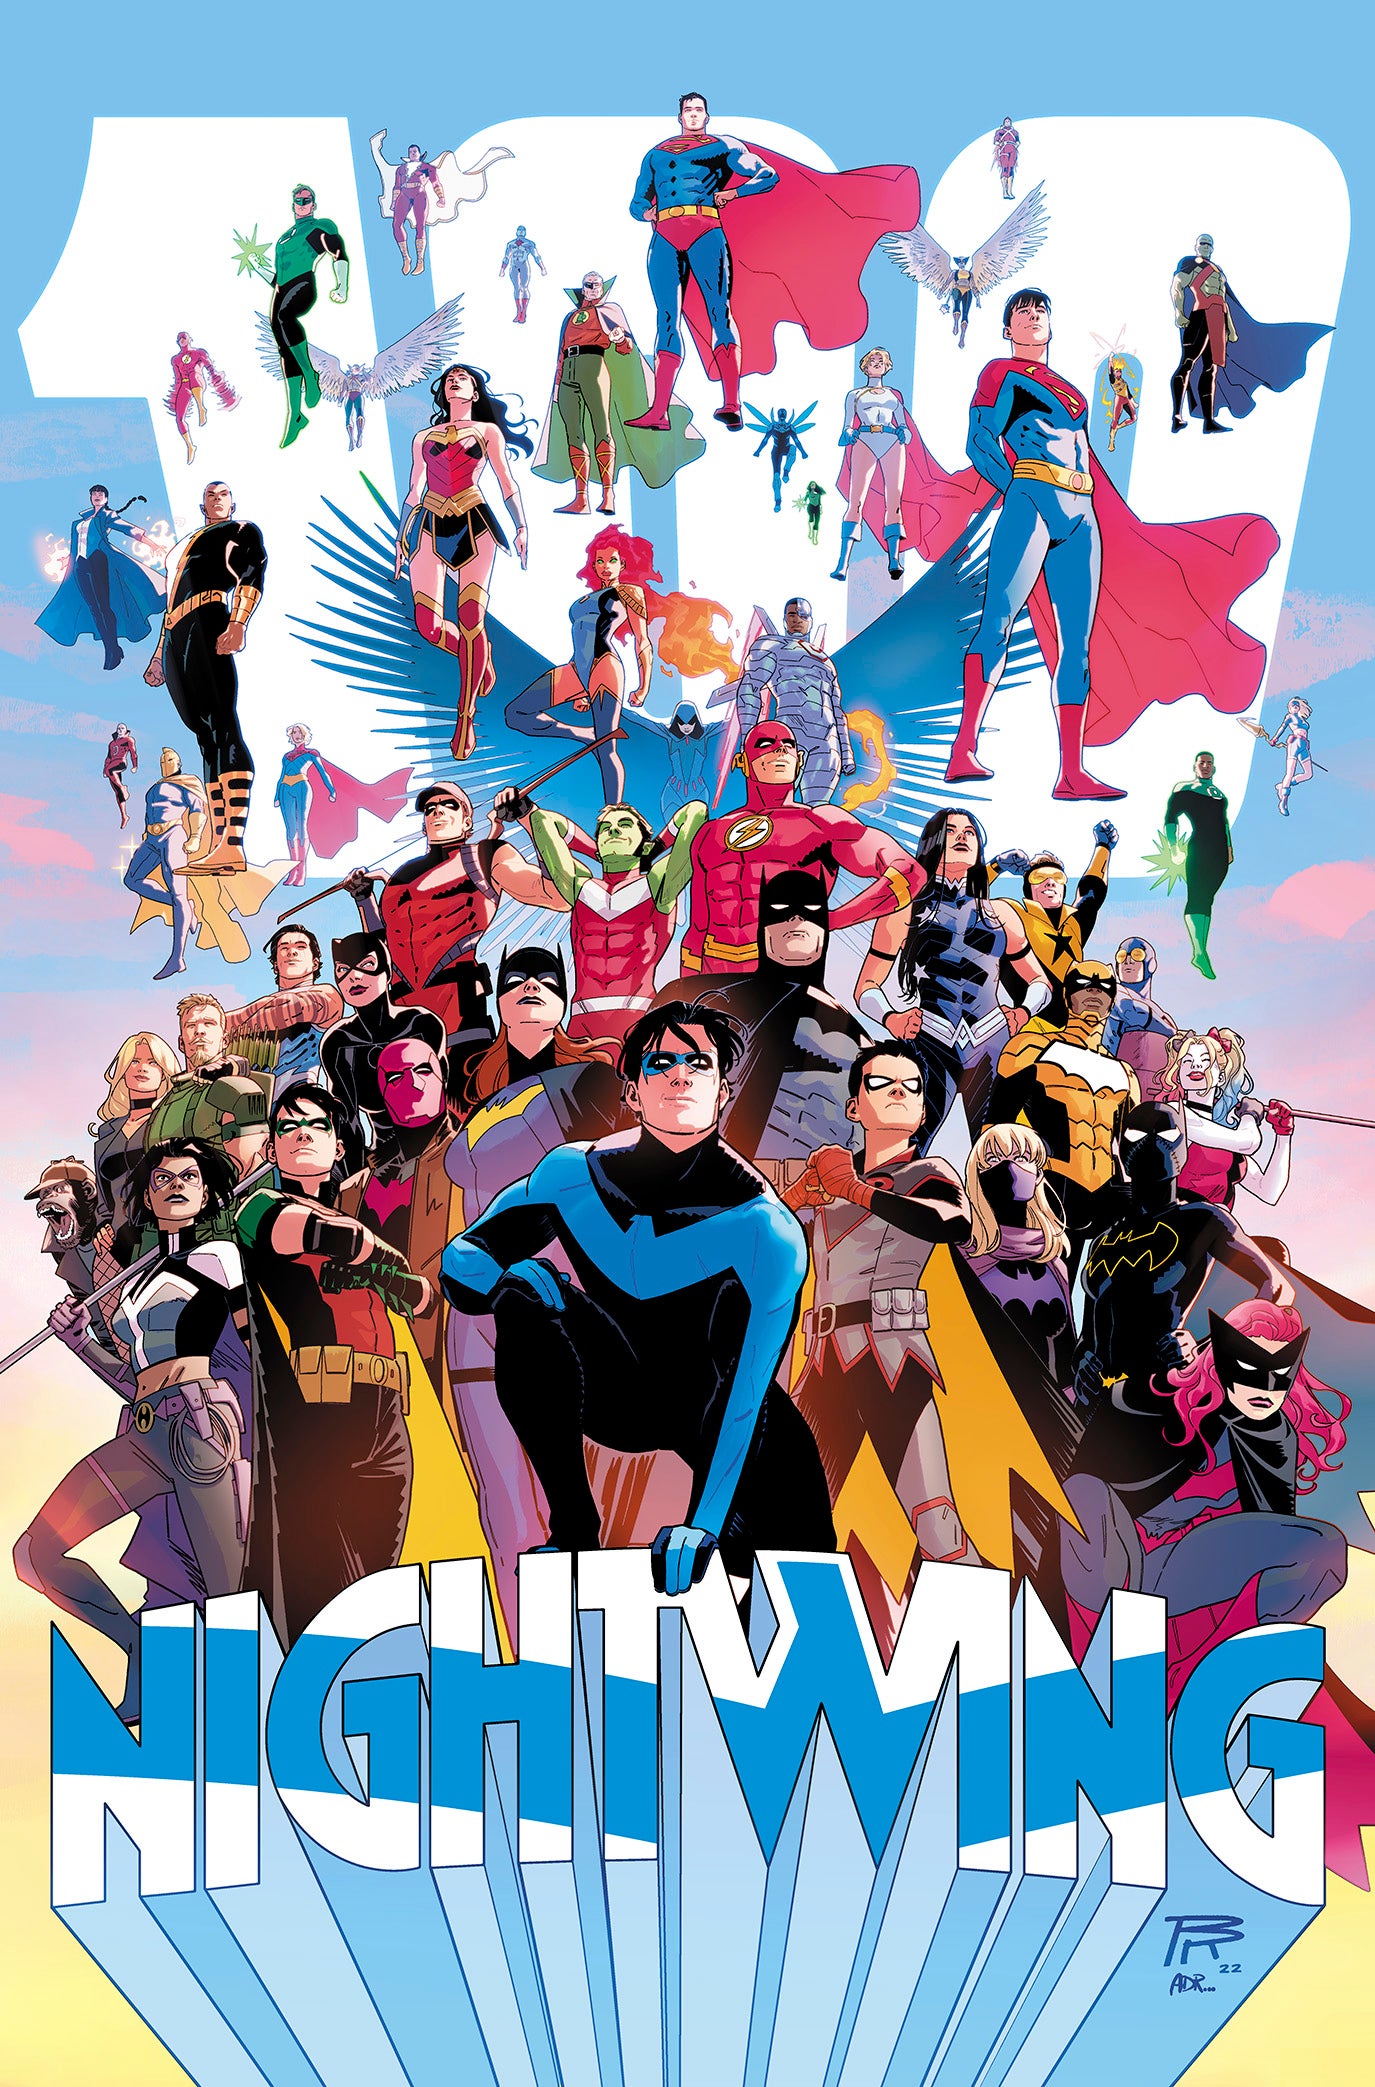 Nightwing #100 by Bruno Redondo